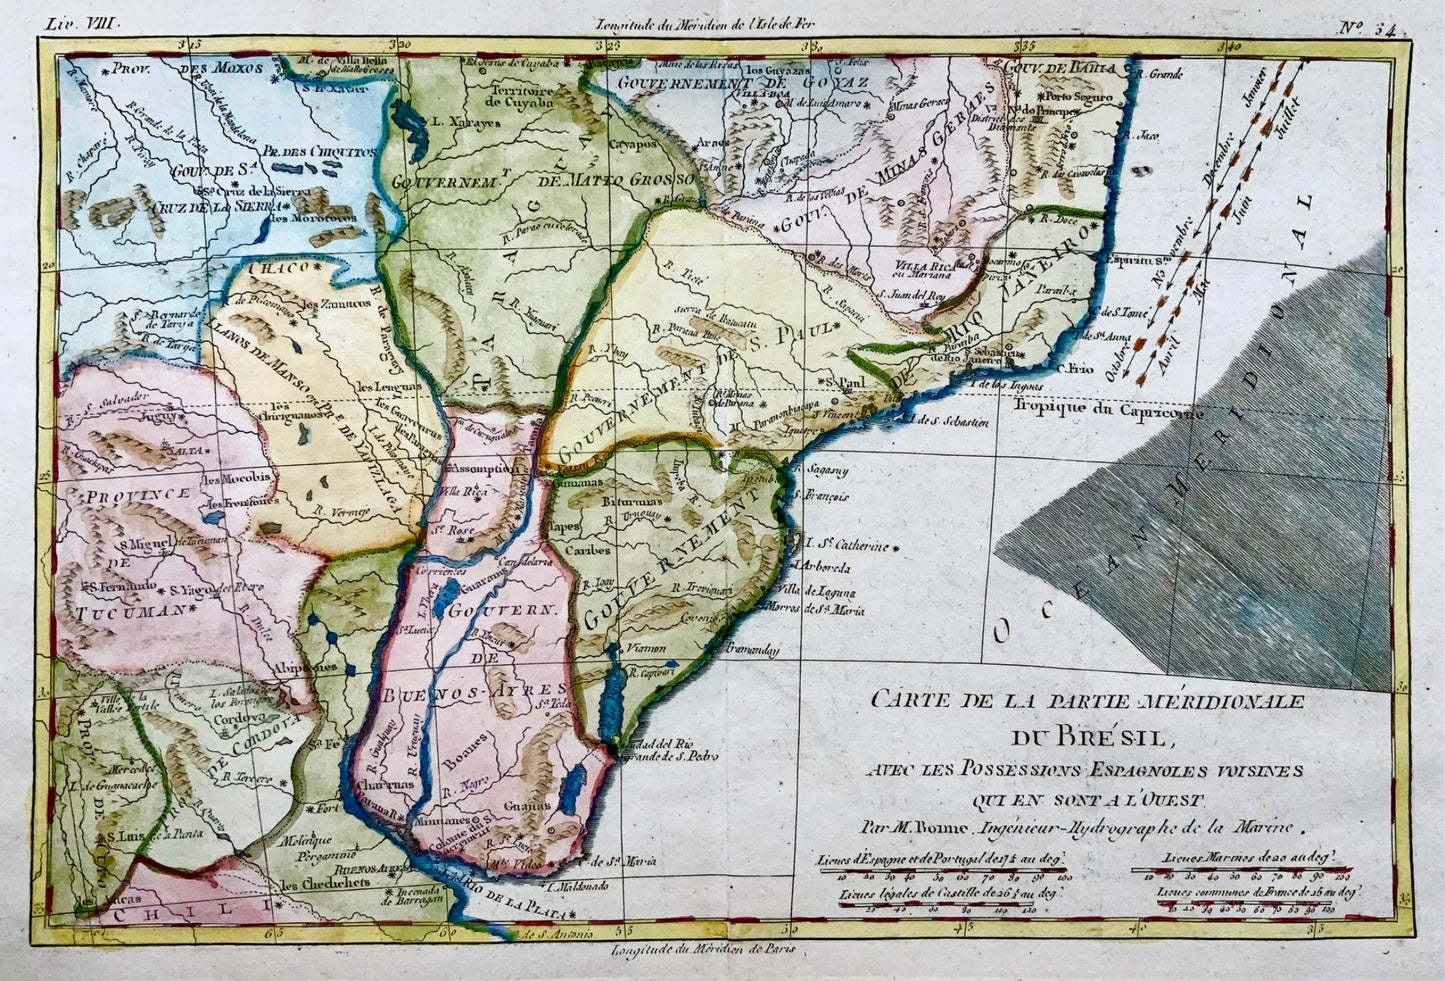 1780 Brazil, Brésil, Spanish possessions, Bonne, hand coloured engraved map